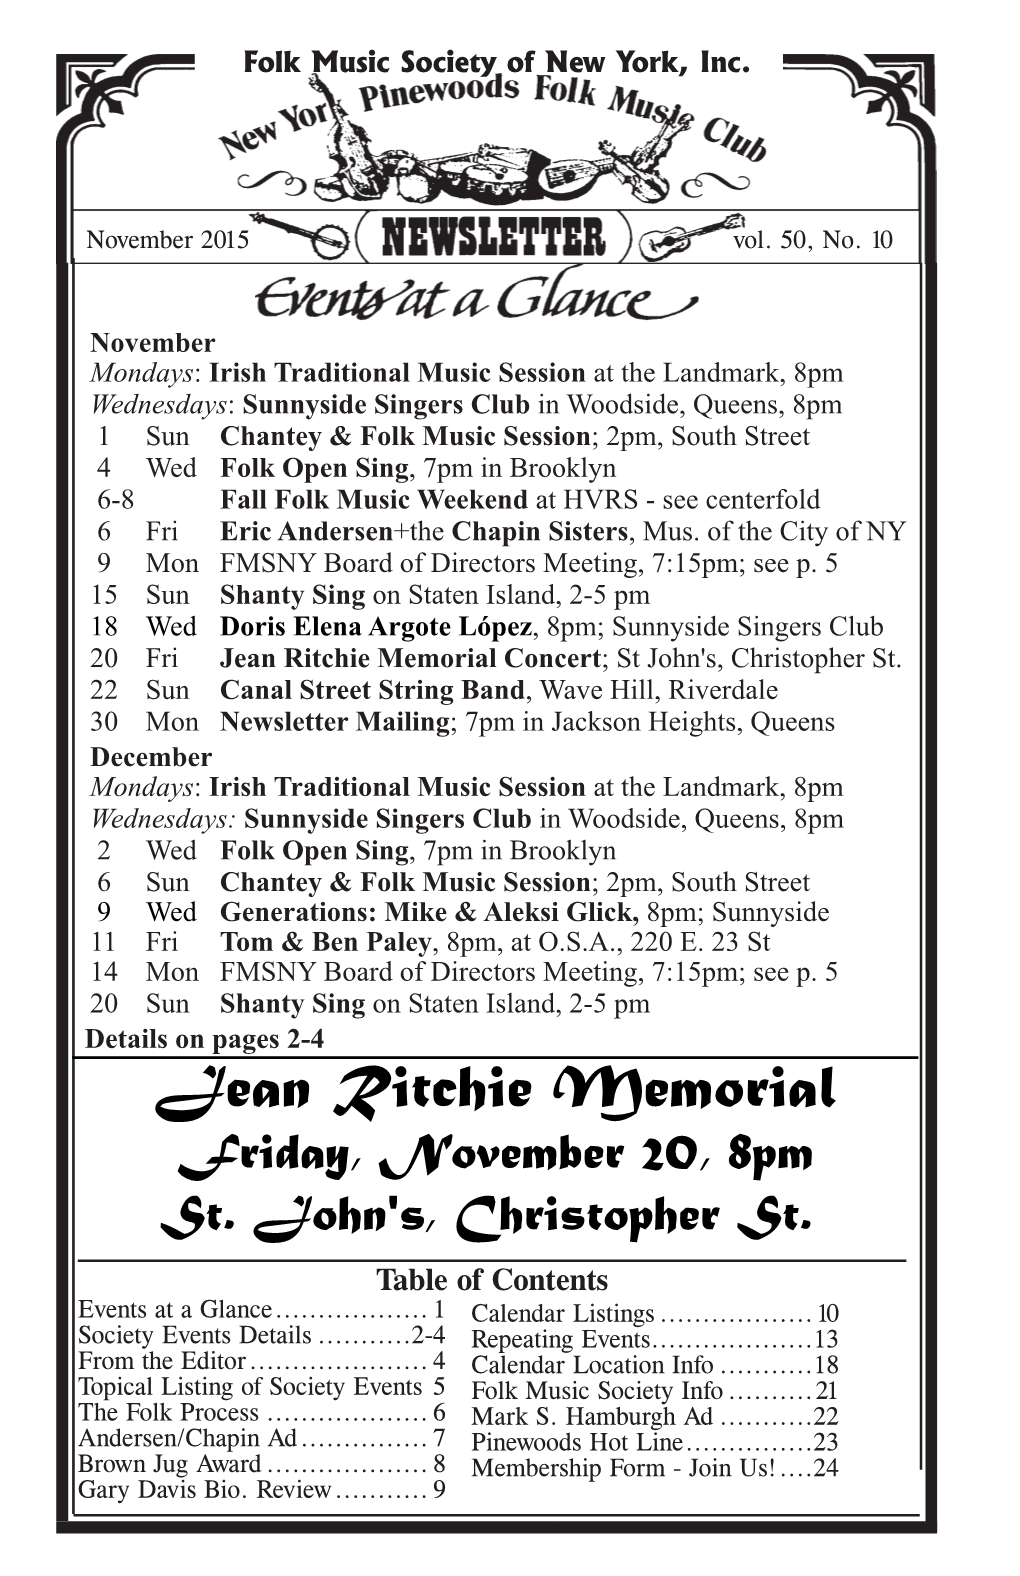 Jean Ritchie Memorial Concert; St John's, Christopher St